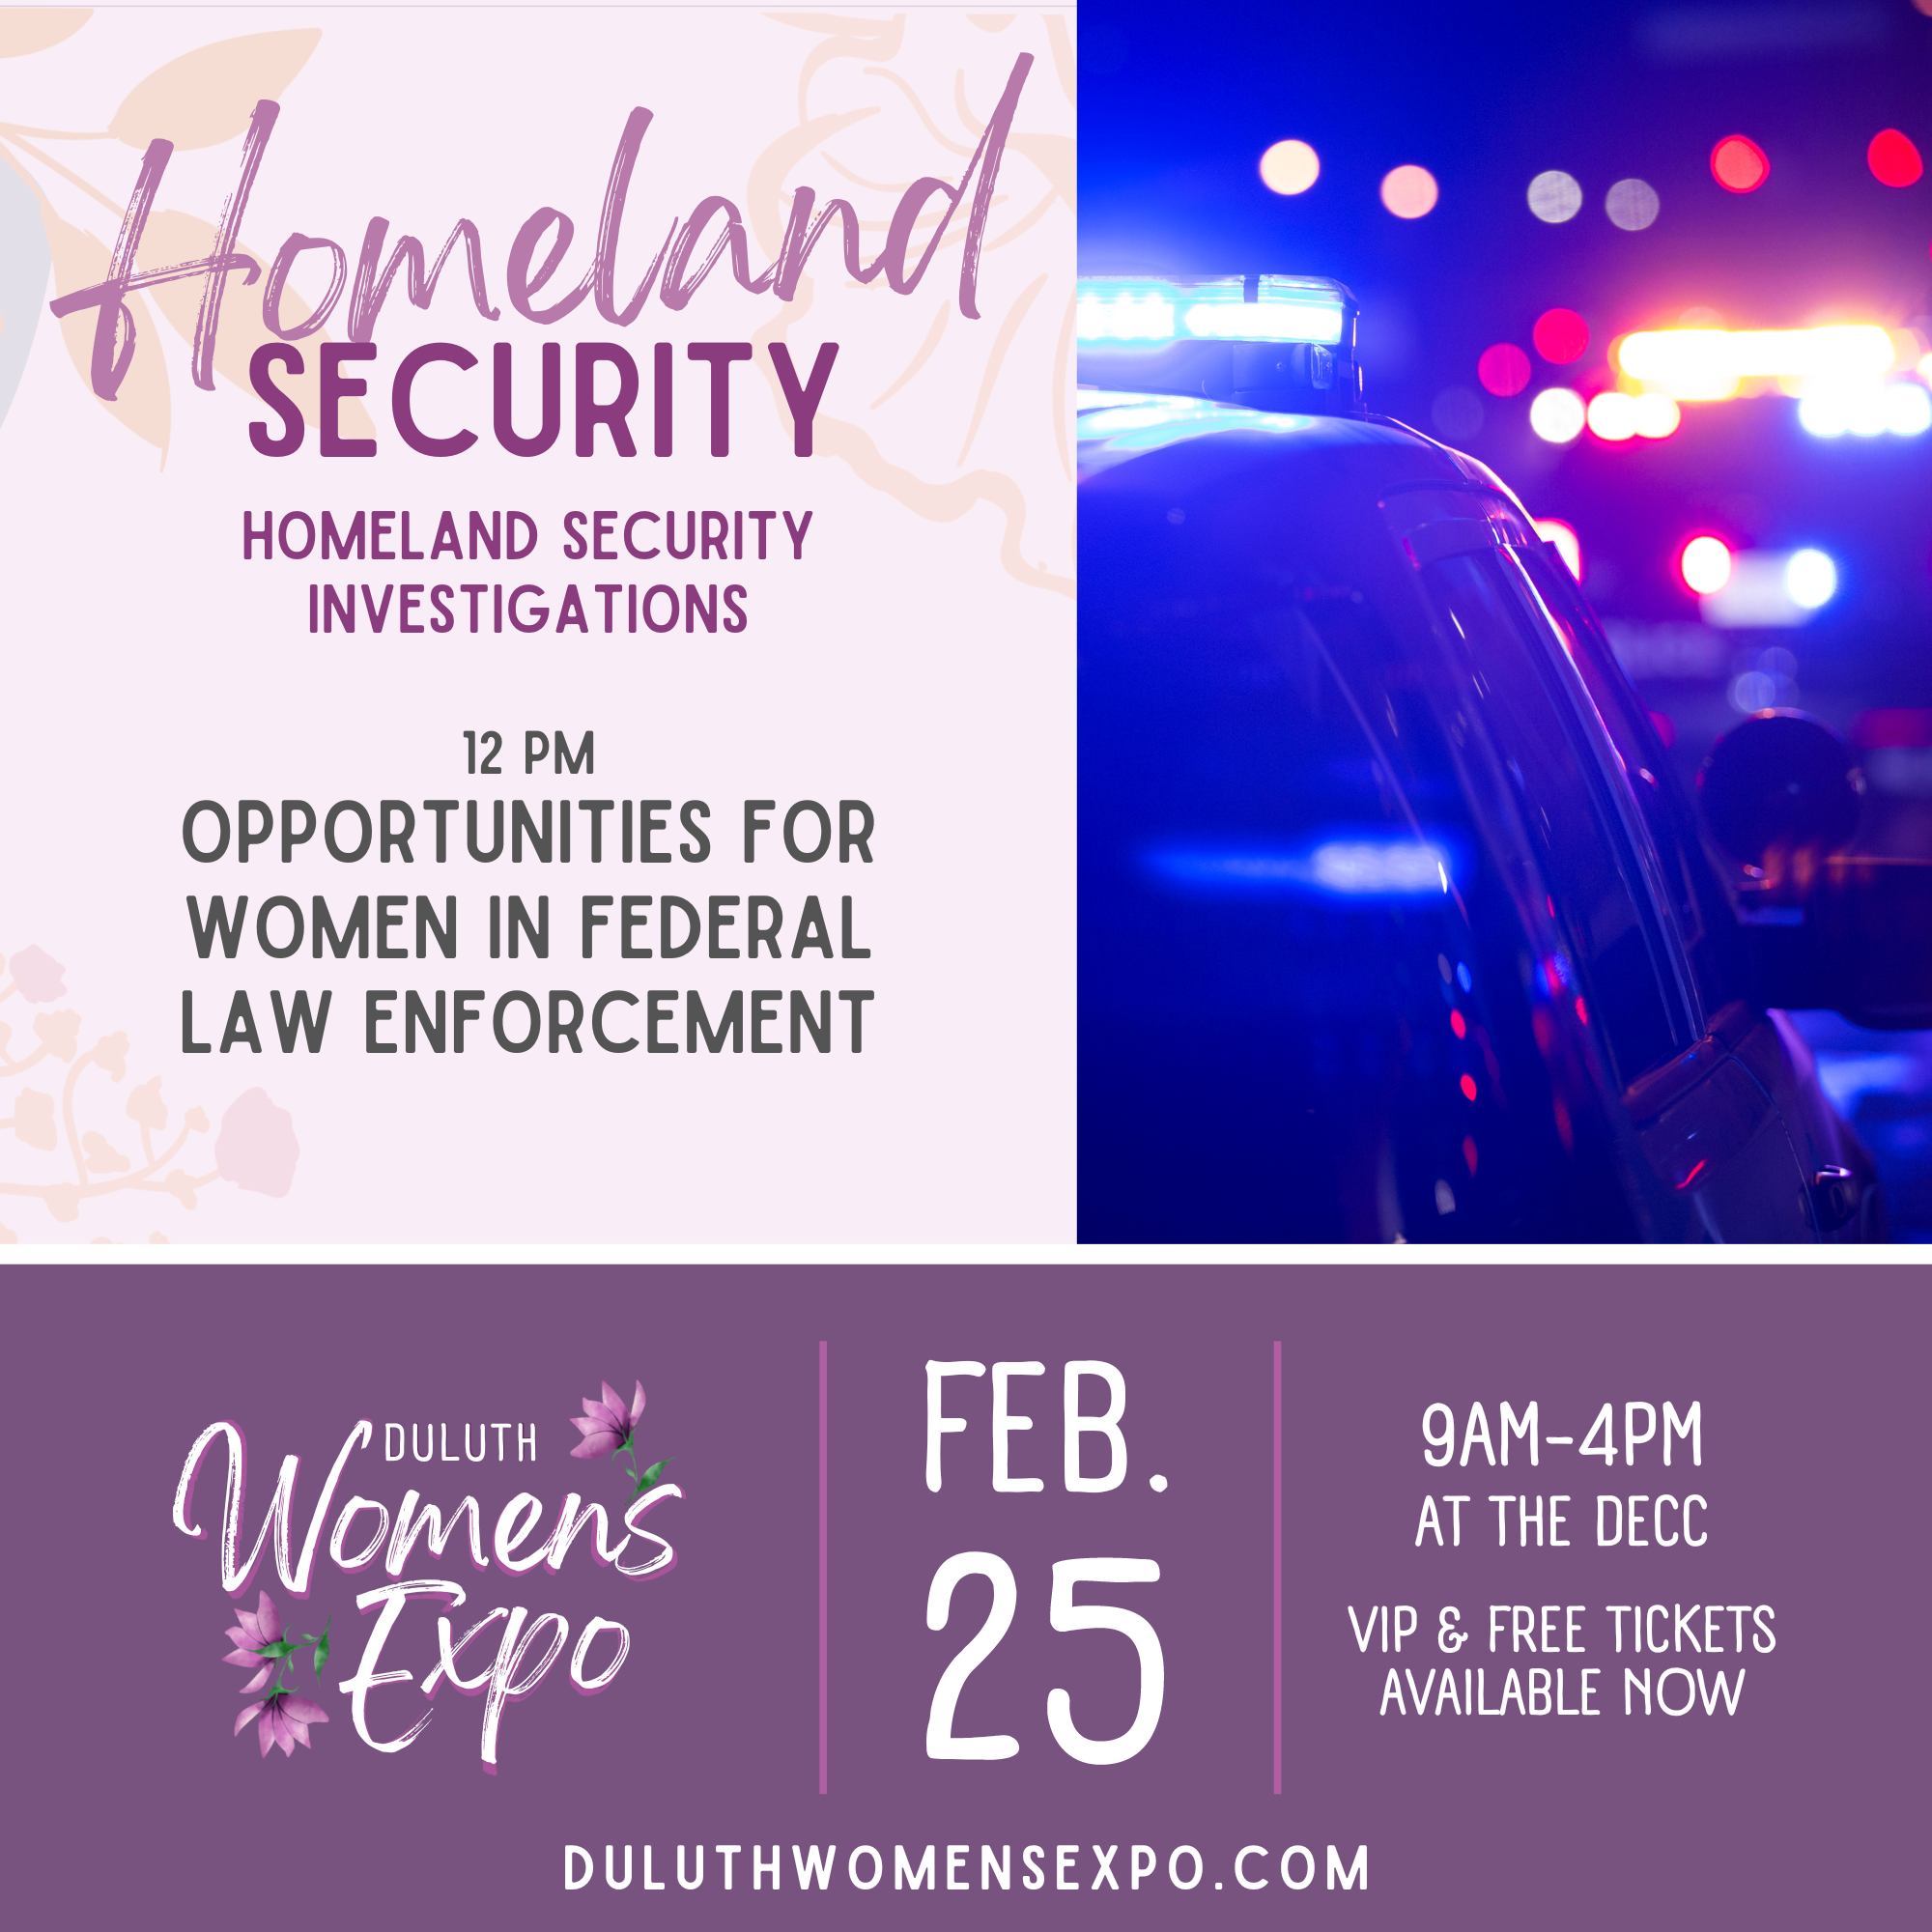 Opportunities for Women in Federal Law Enforcement